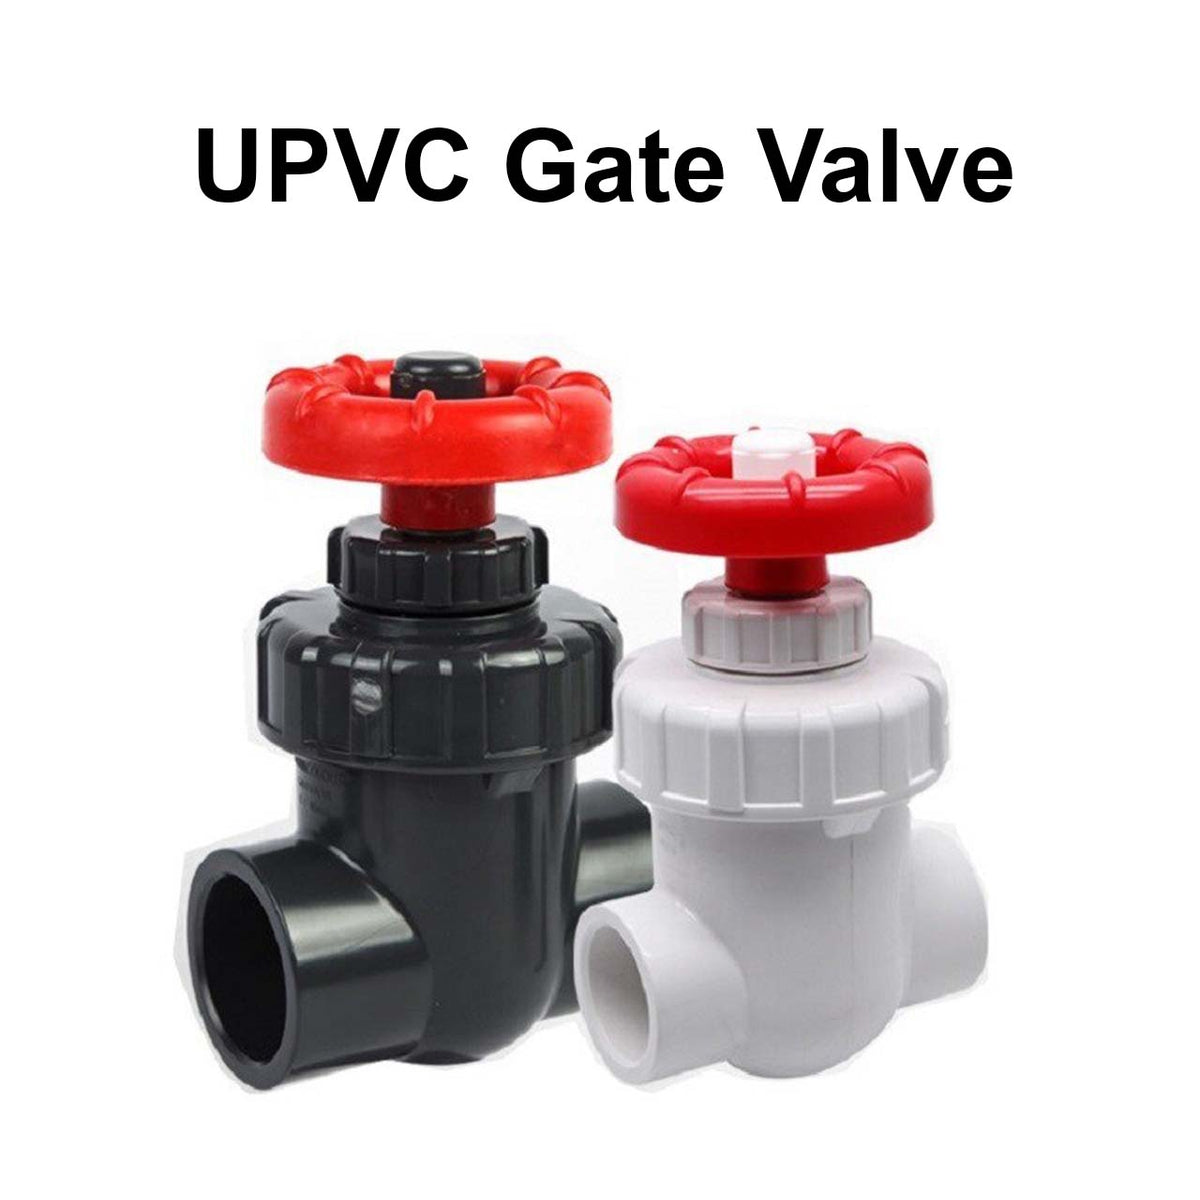 UPVC Gate Valve